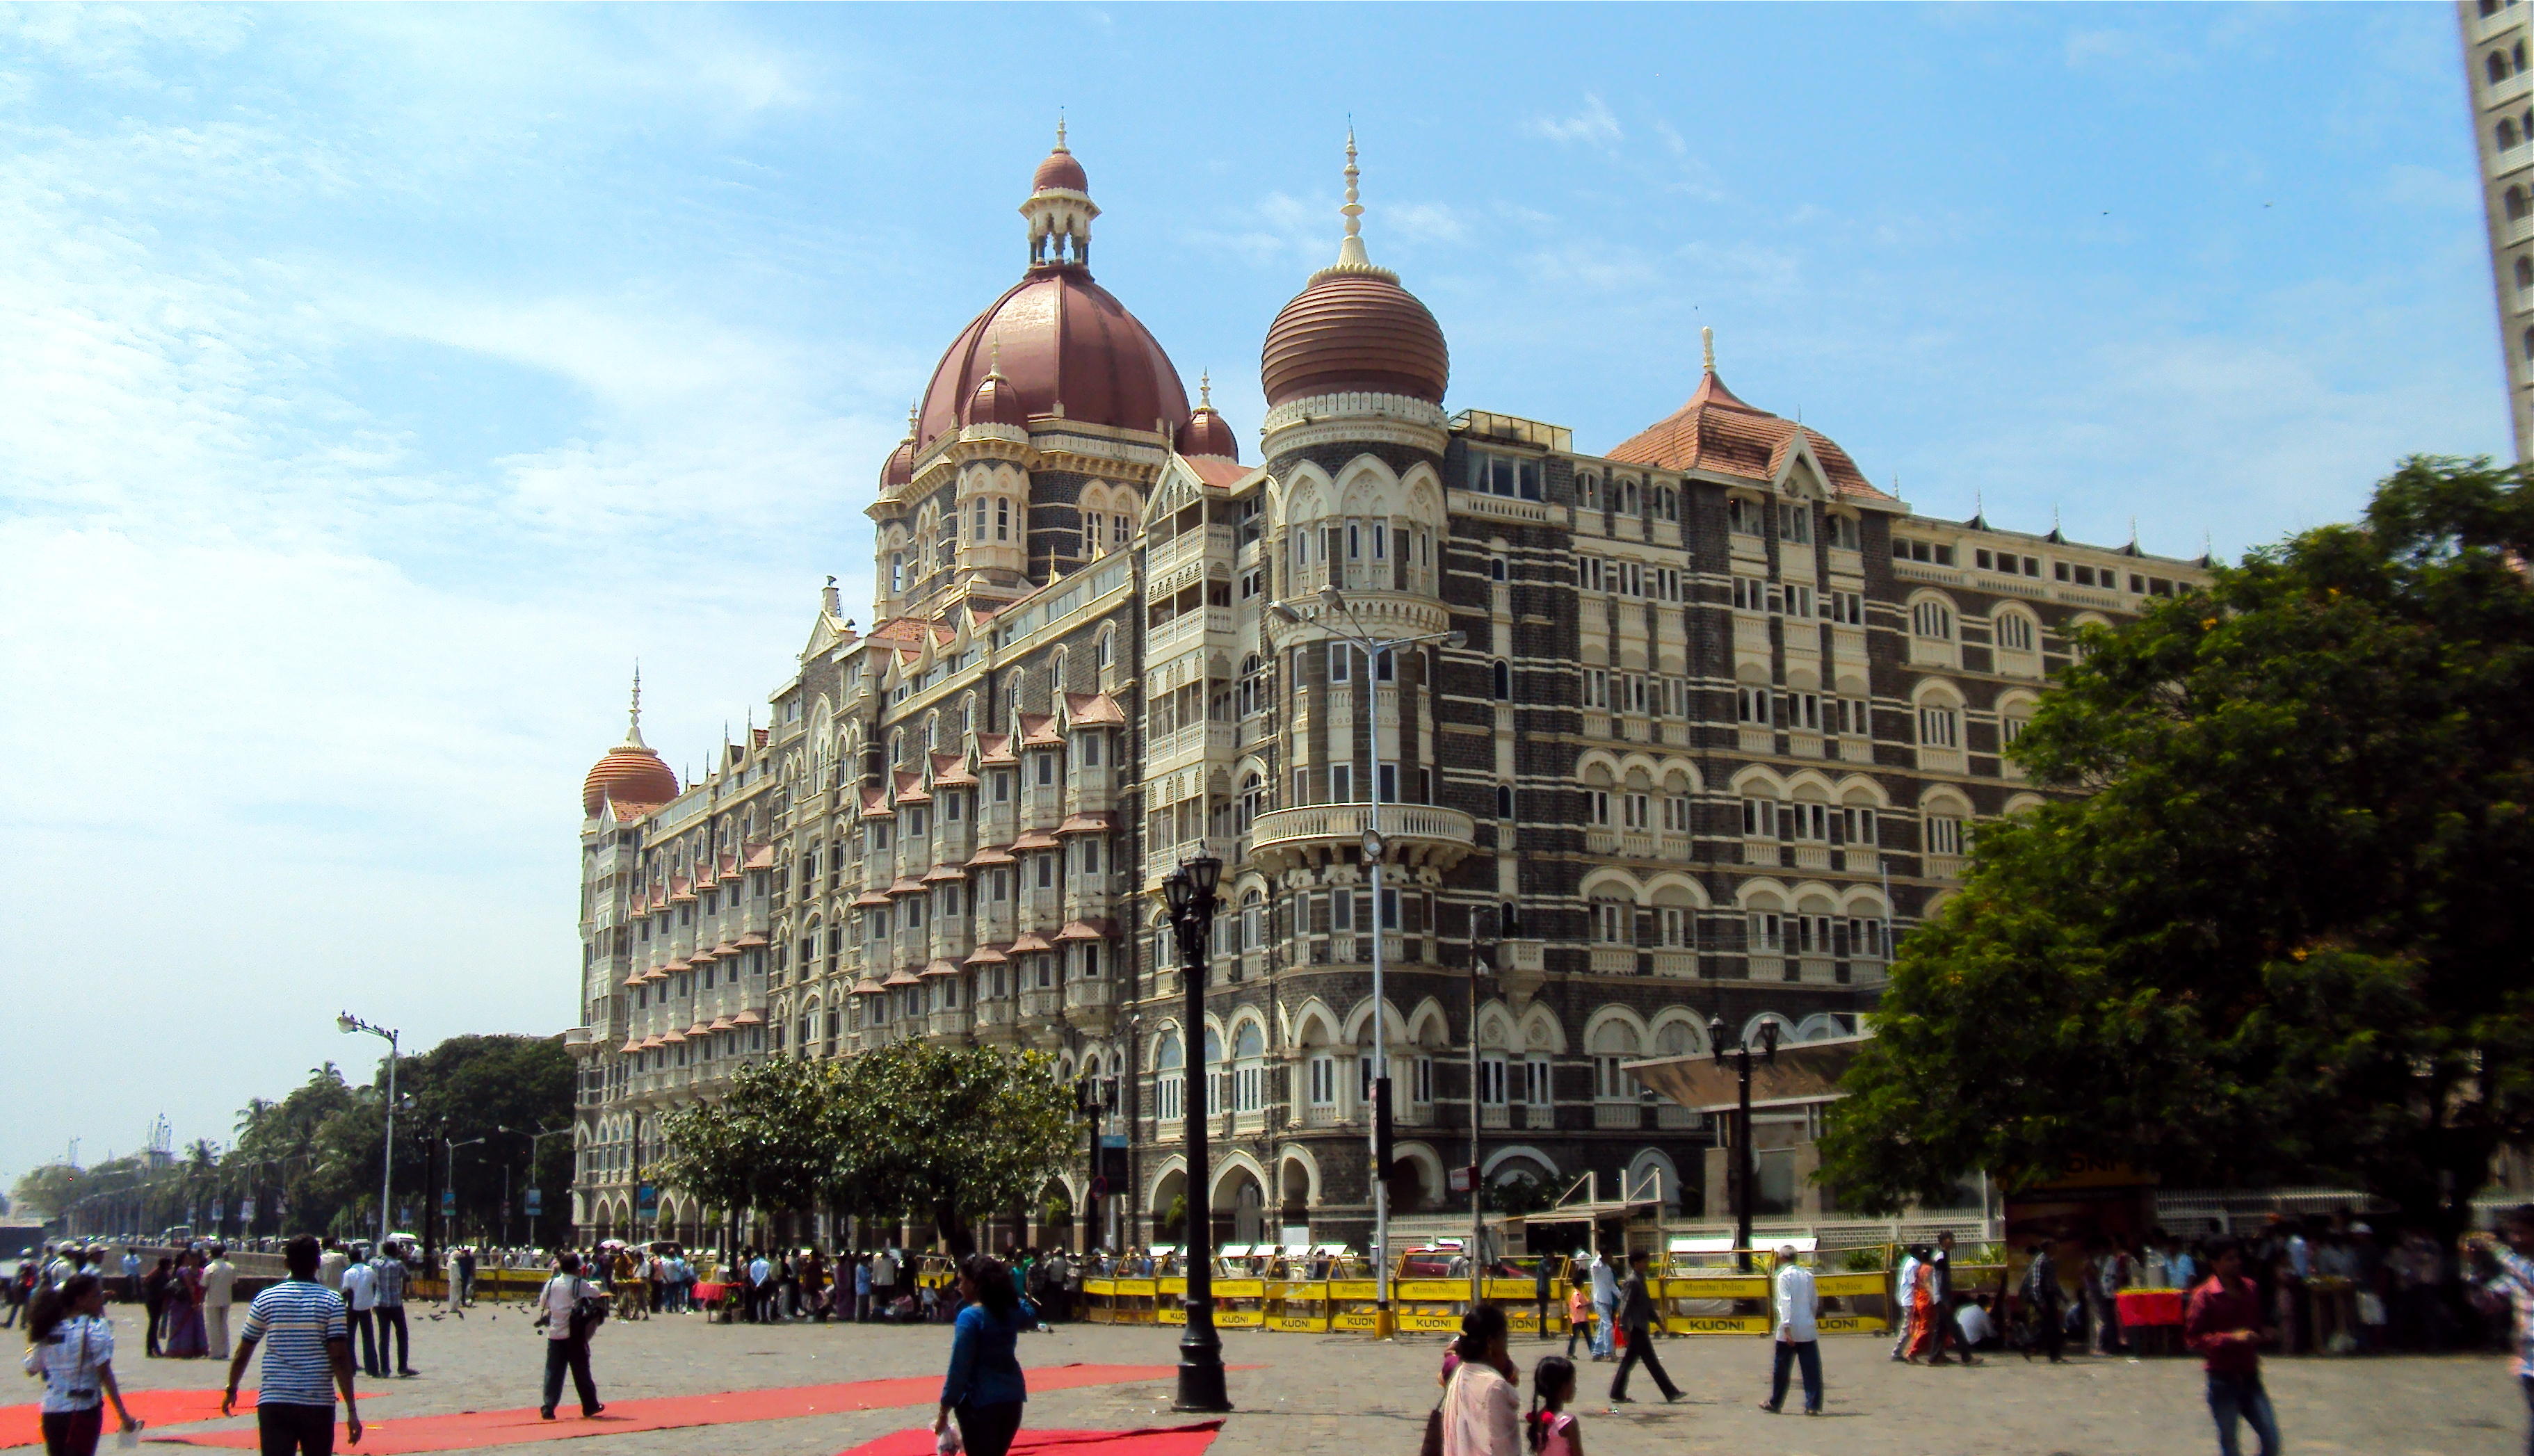 Photo of the Taj Hotel, a famous landmark in downtowm Mumbai